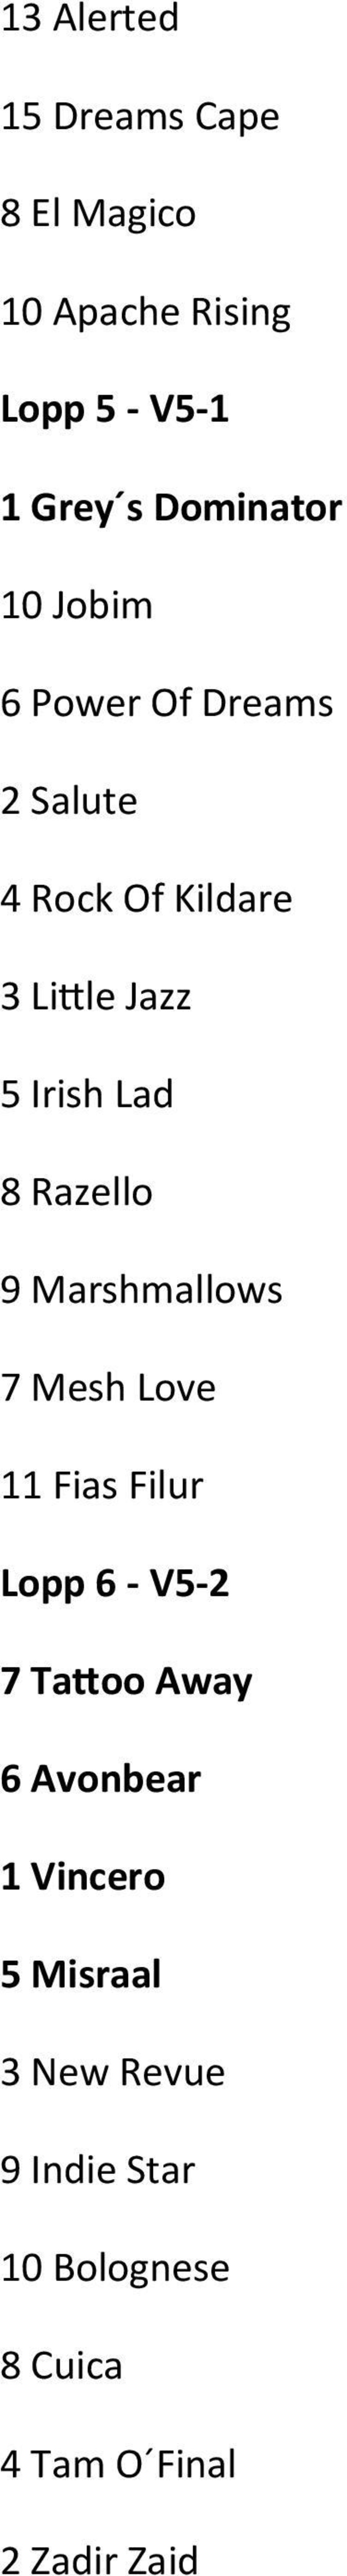 Razello 9 Marshmallows 7 Mesh Love 11 Fias Filur Lopp 6 - V5-2 7 Tattoo Away 6 Avonbear